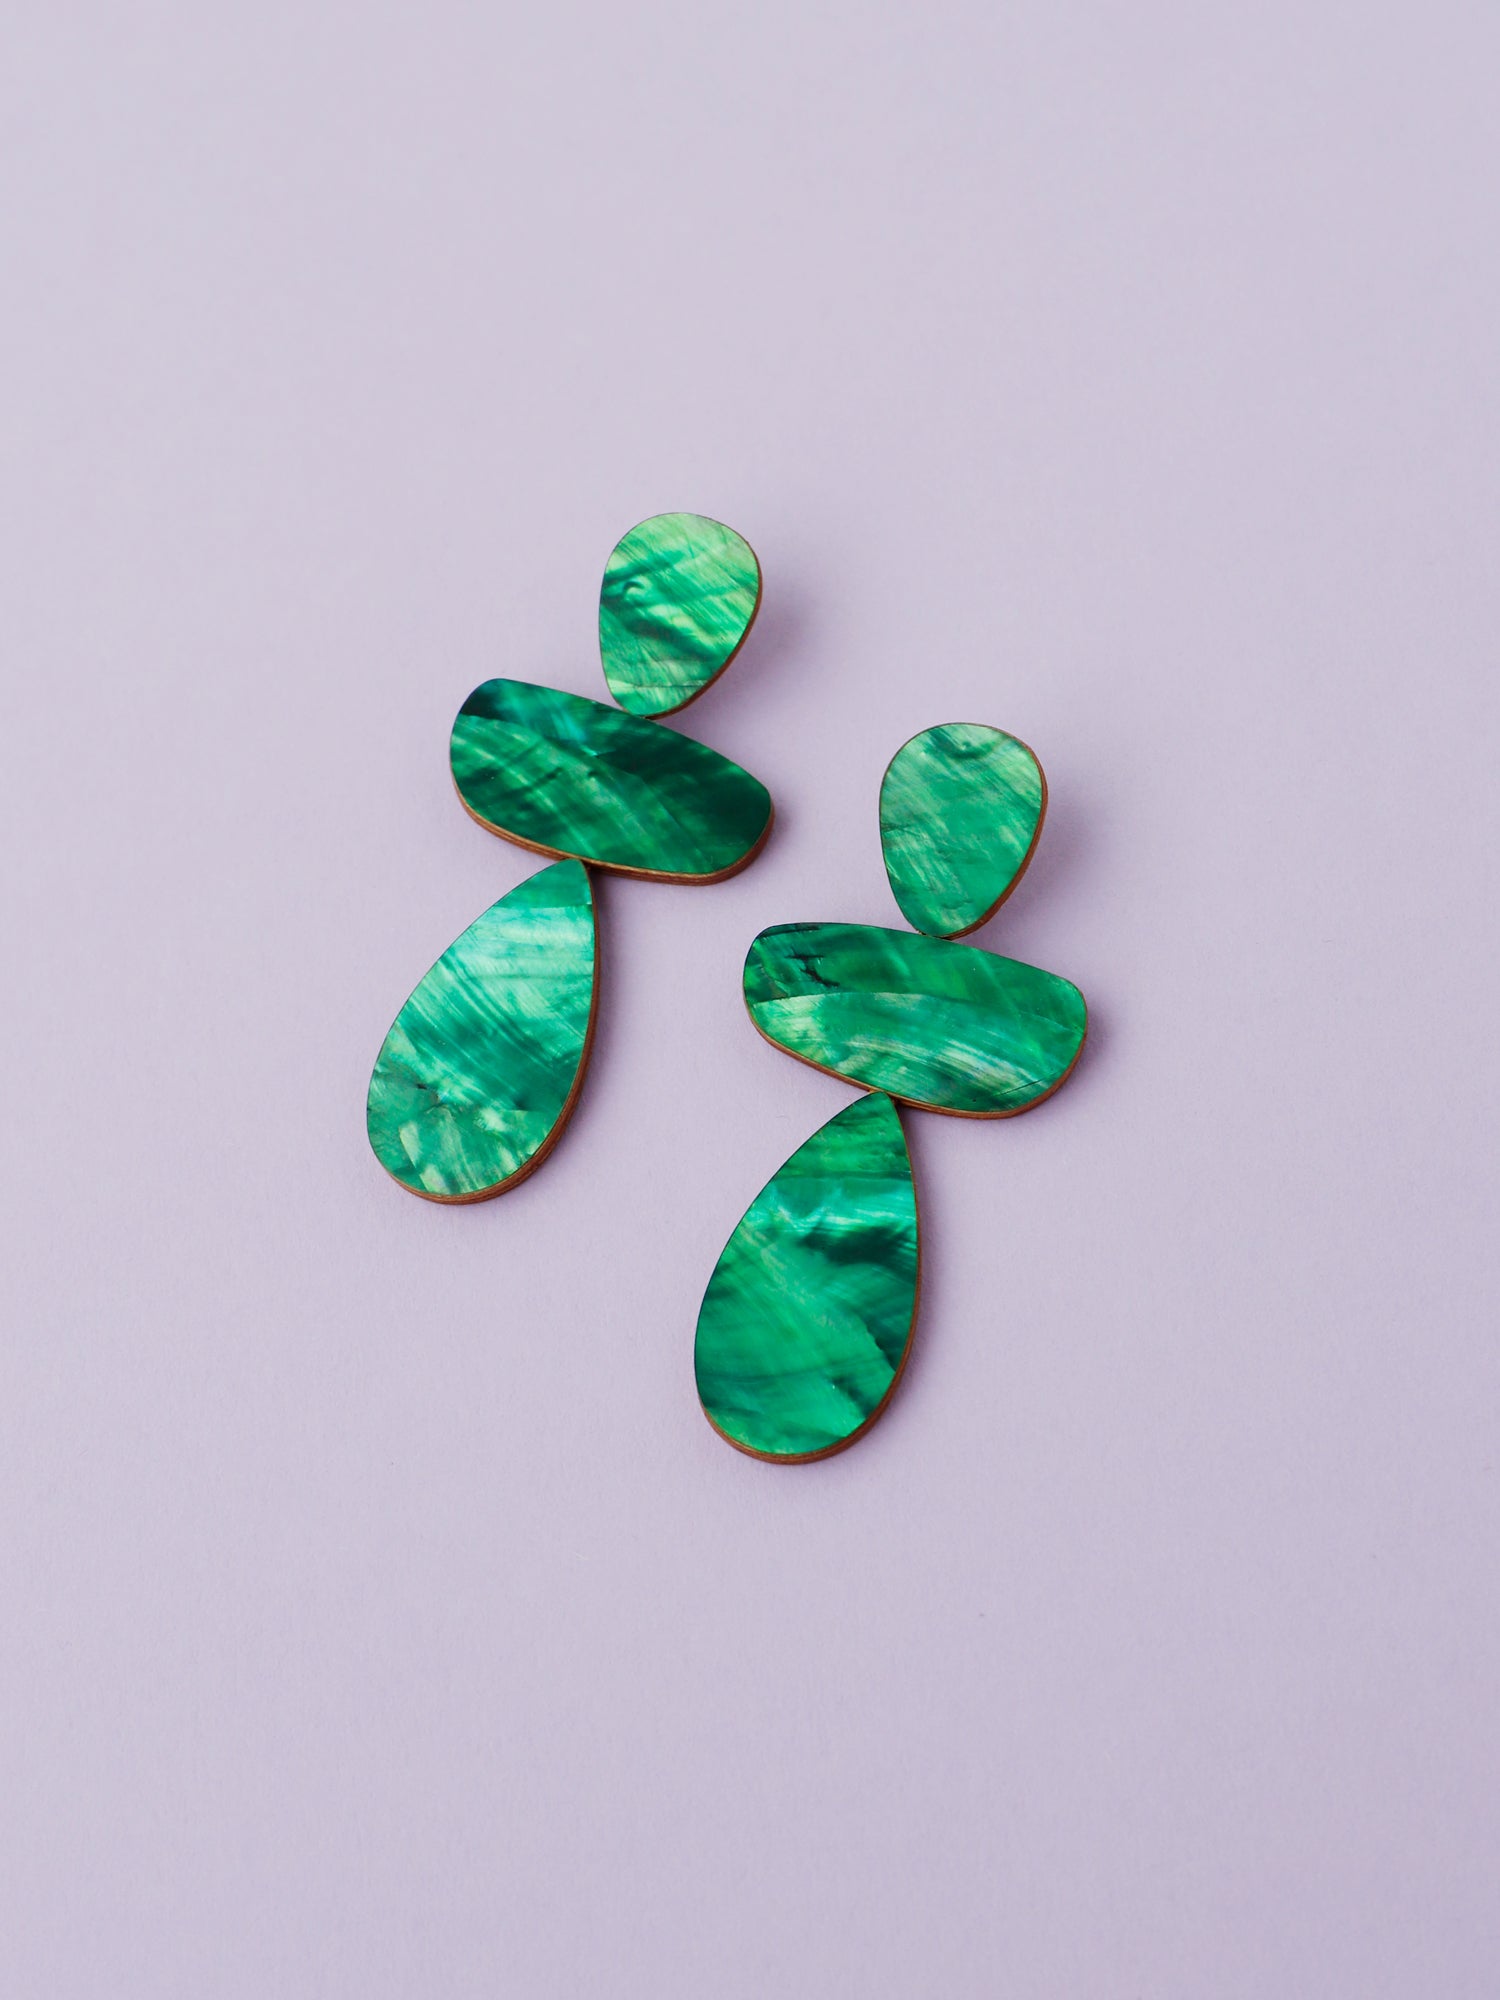 Ana Earrings in Emerald